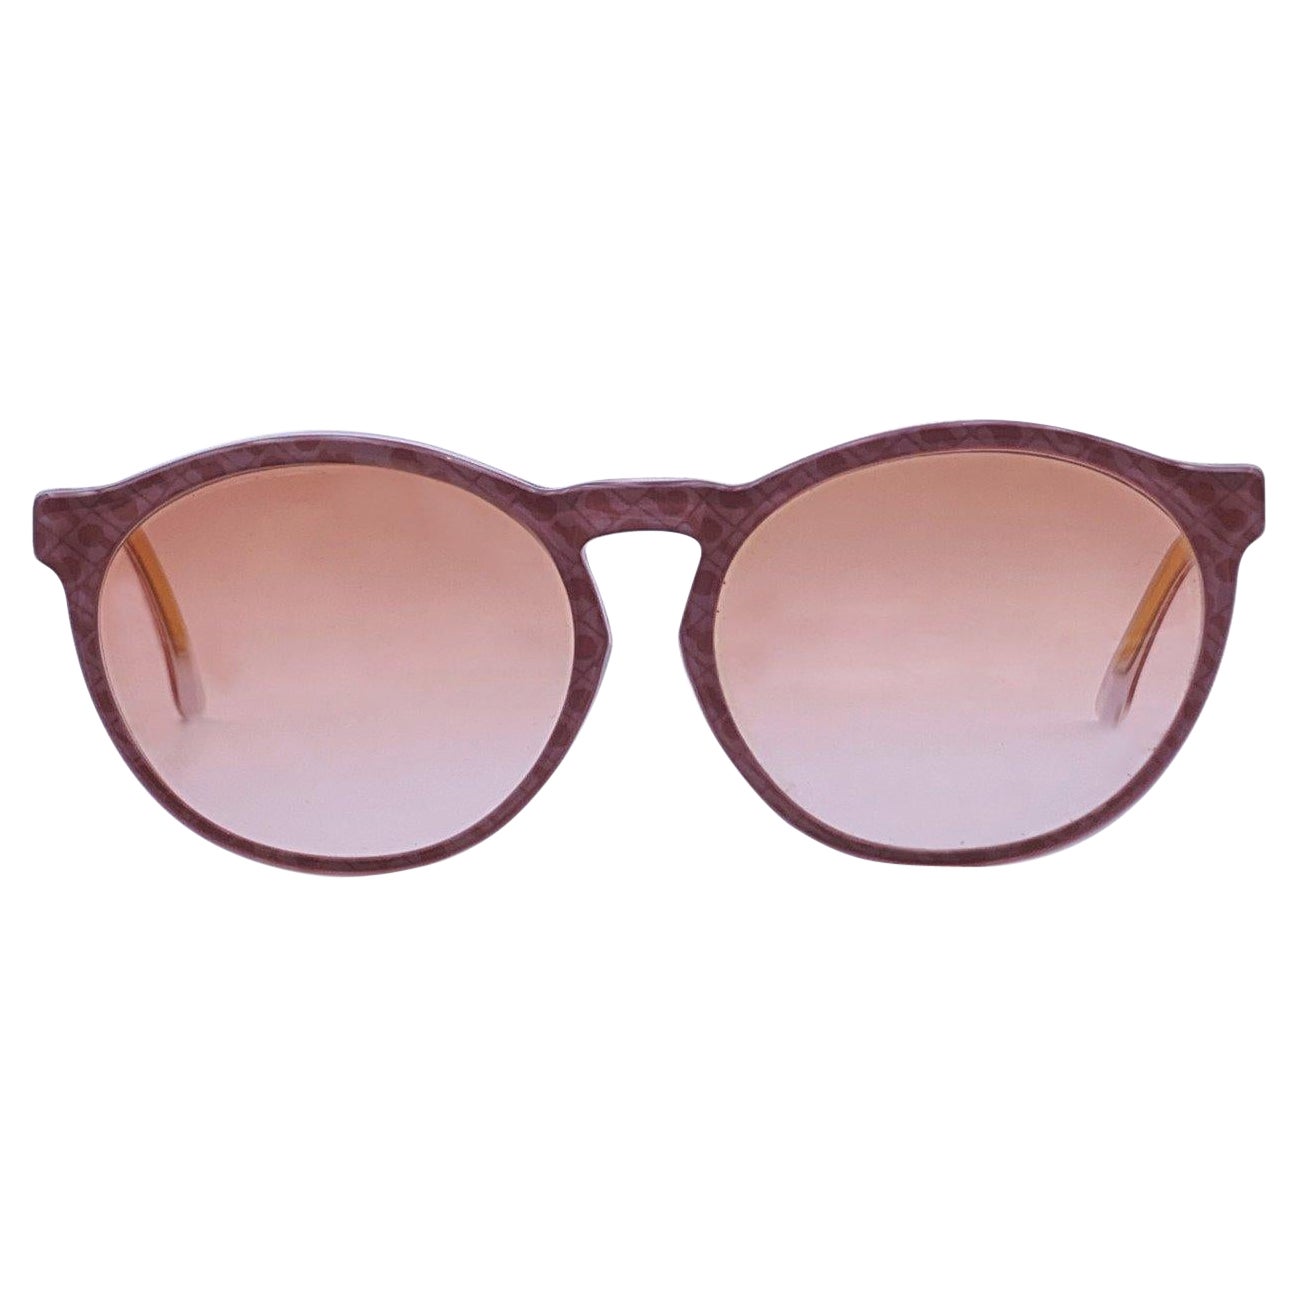 Gherardini Vintage Mint Apricot Pink Logo Sunglasses G/2 56/11 140 mm